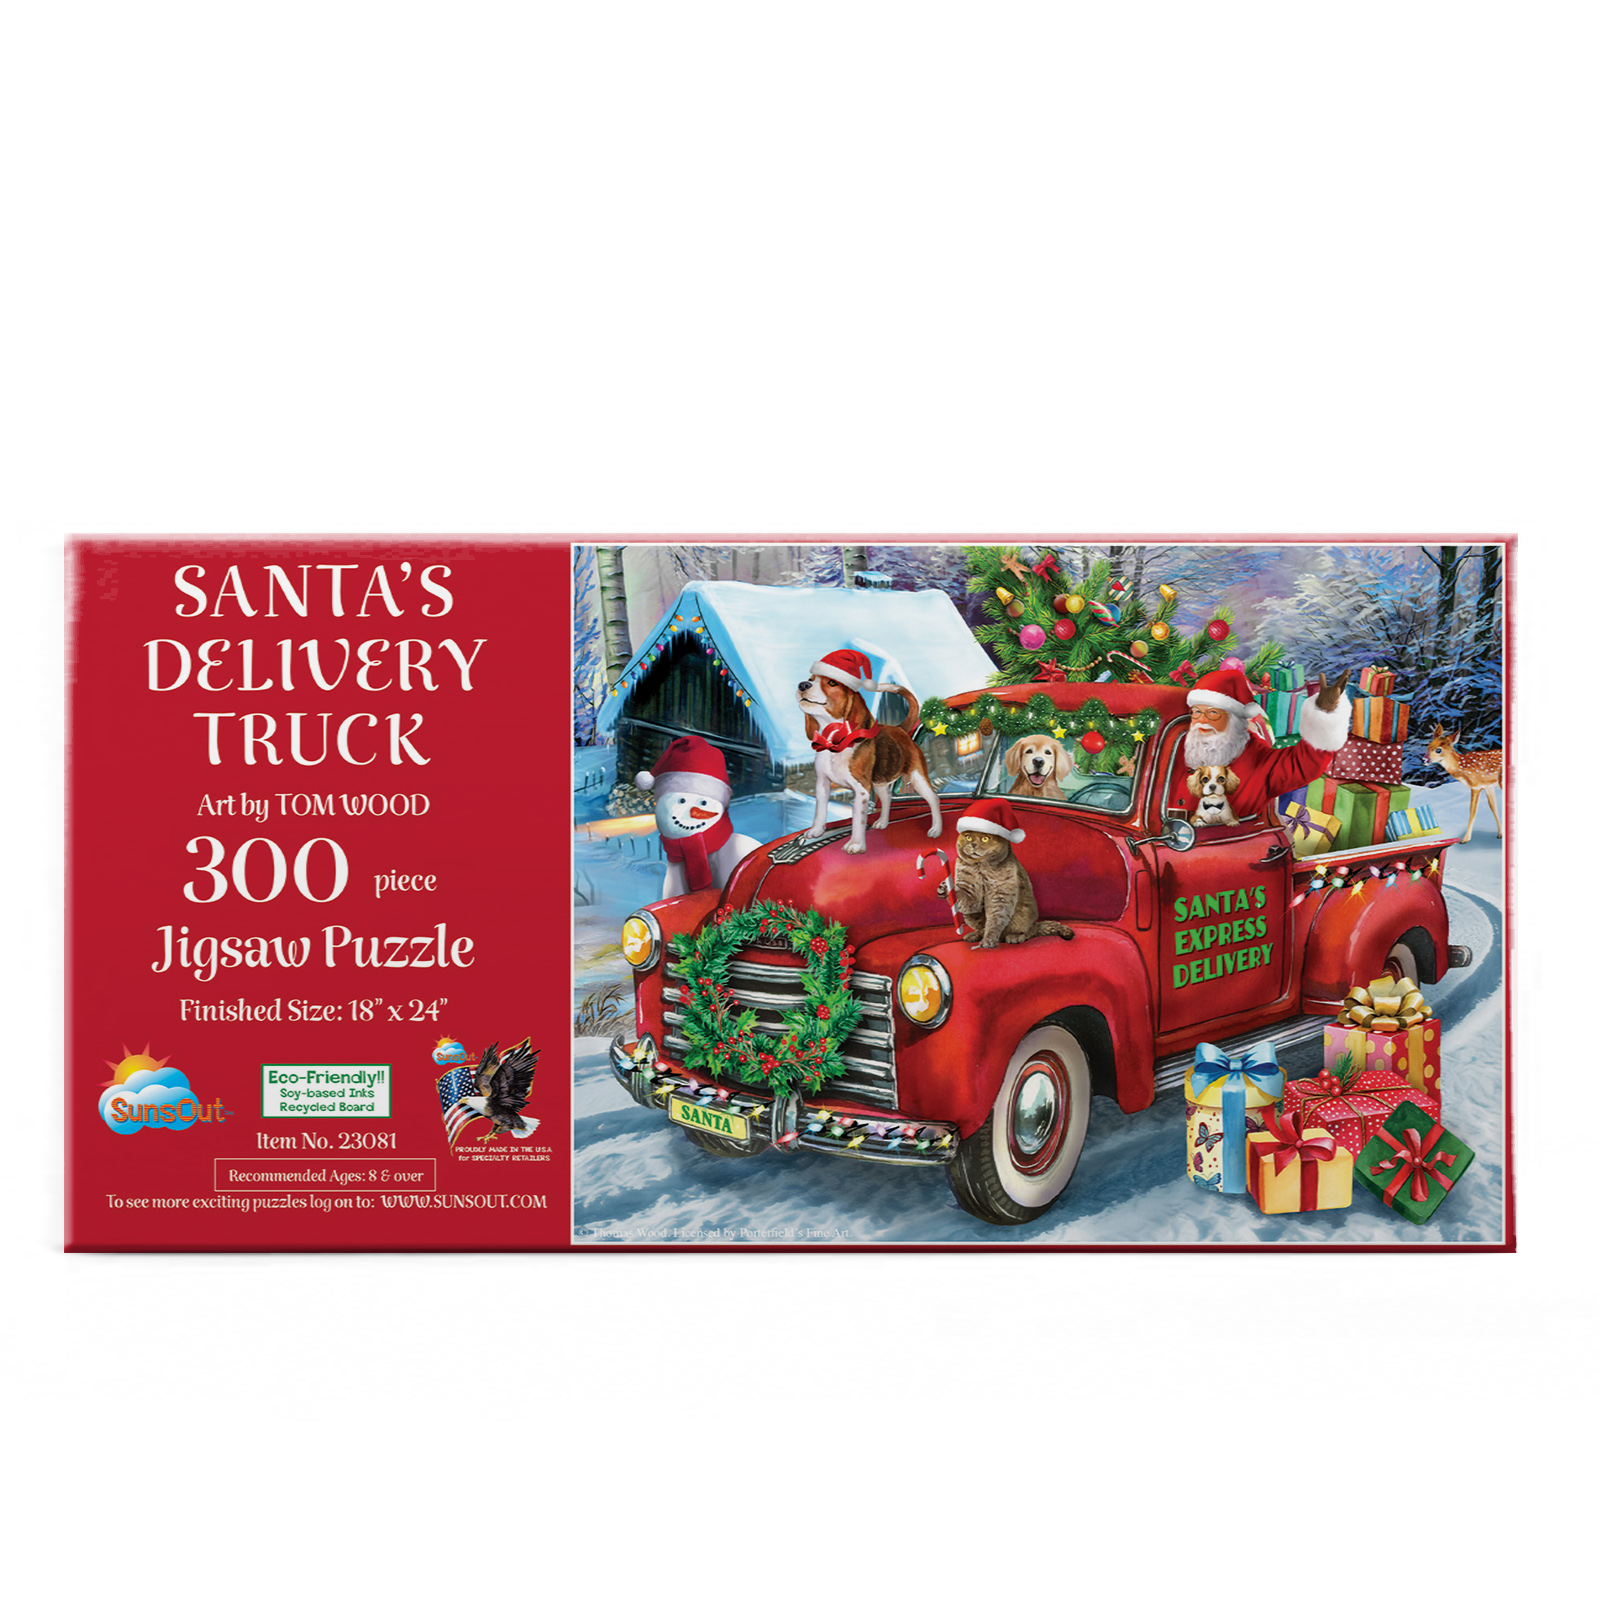 Santa's Delivery Truck